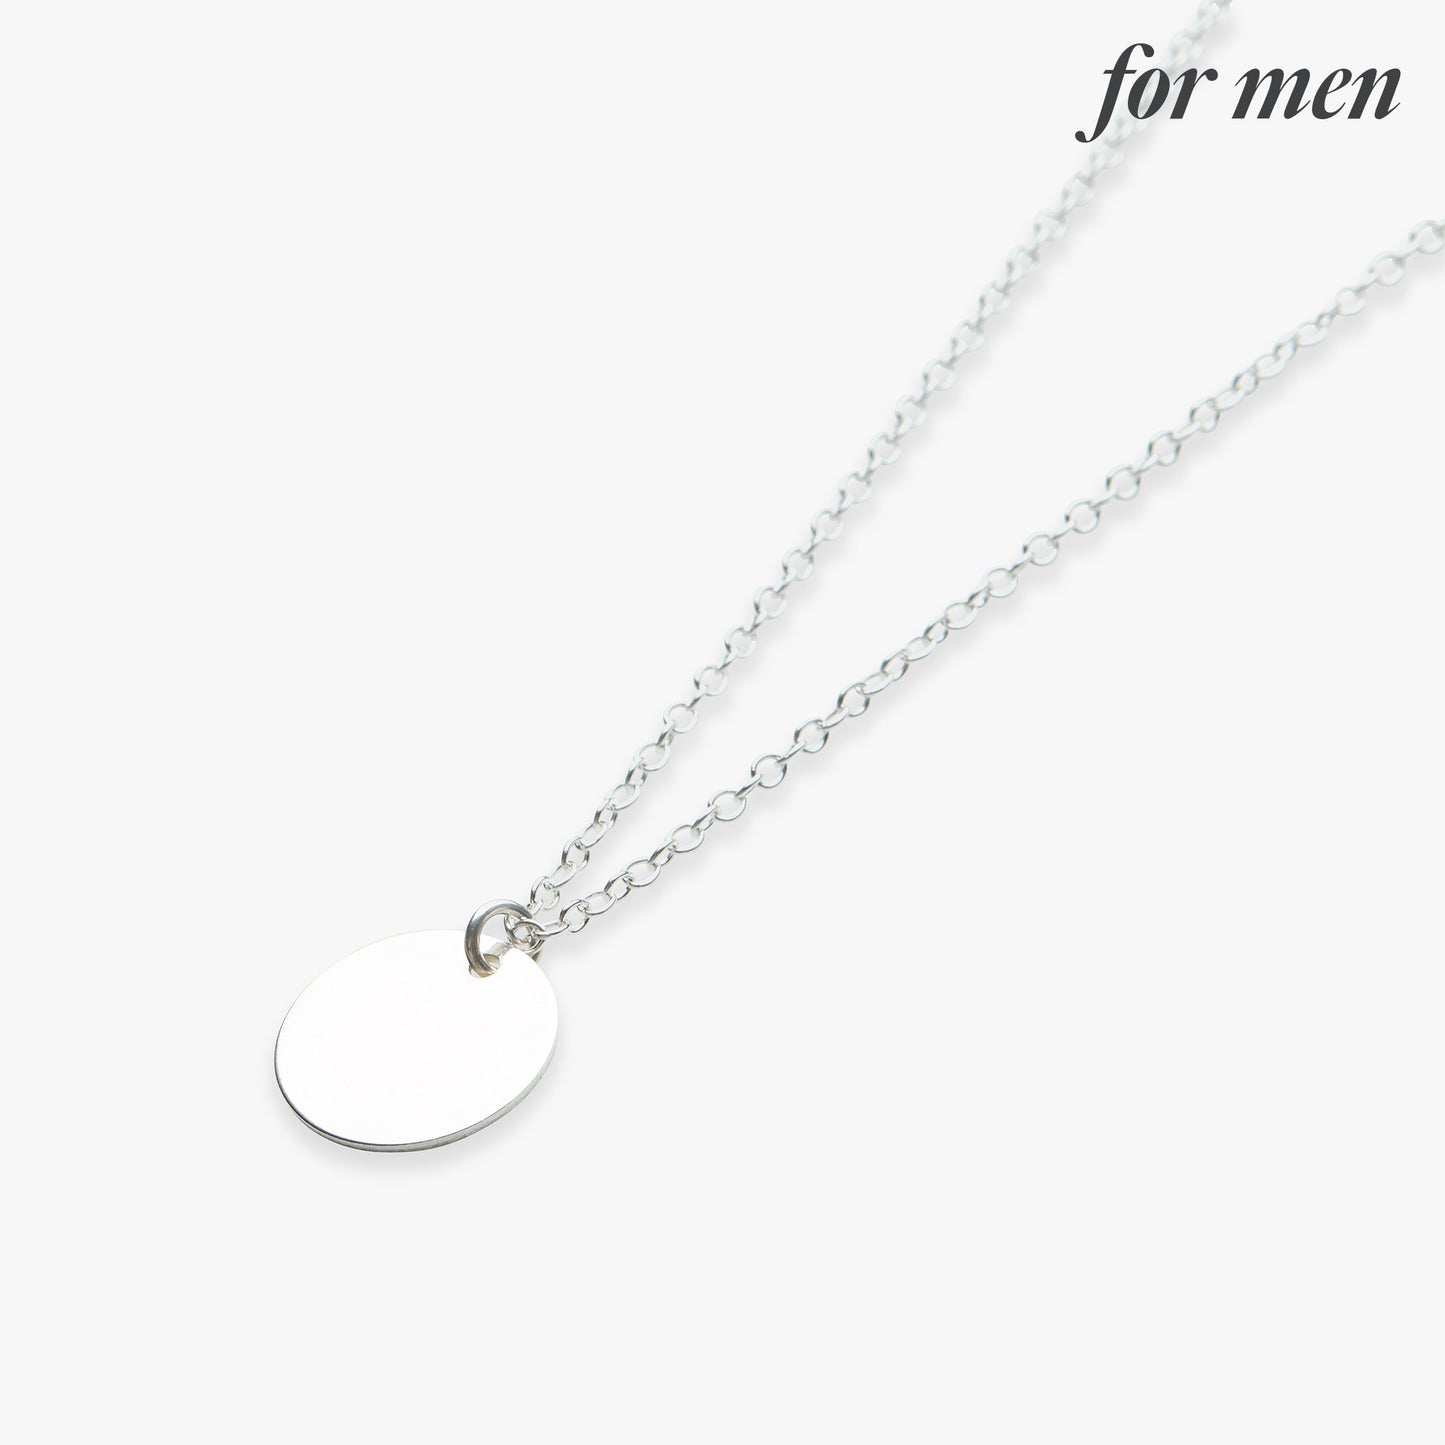 Big coin necklace silver for men